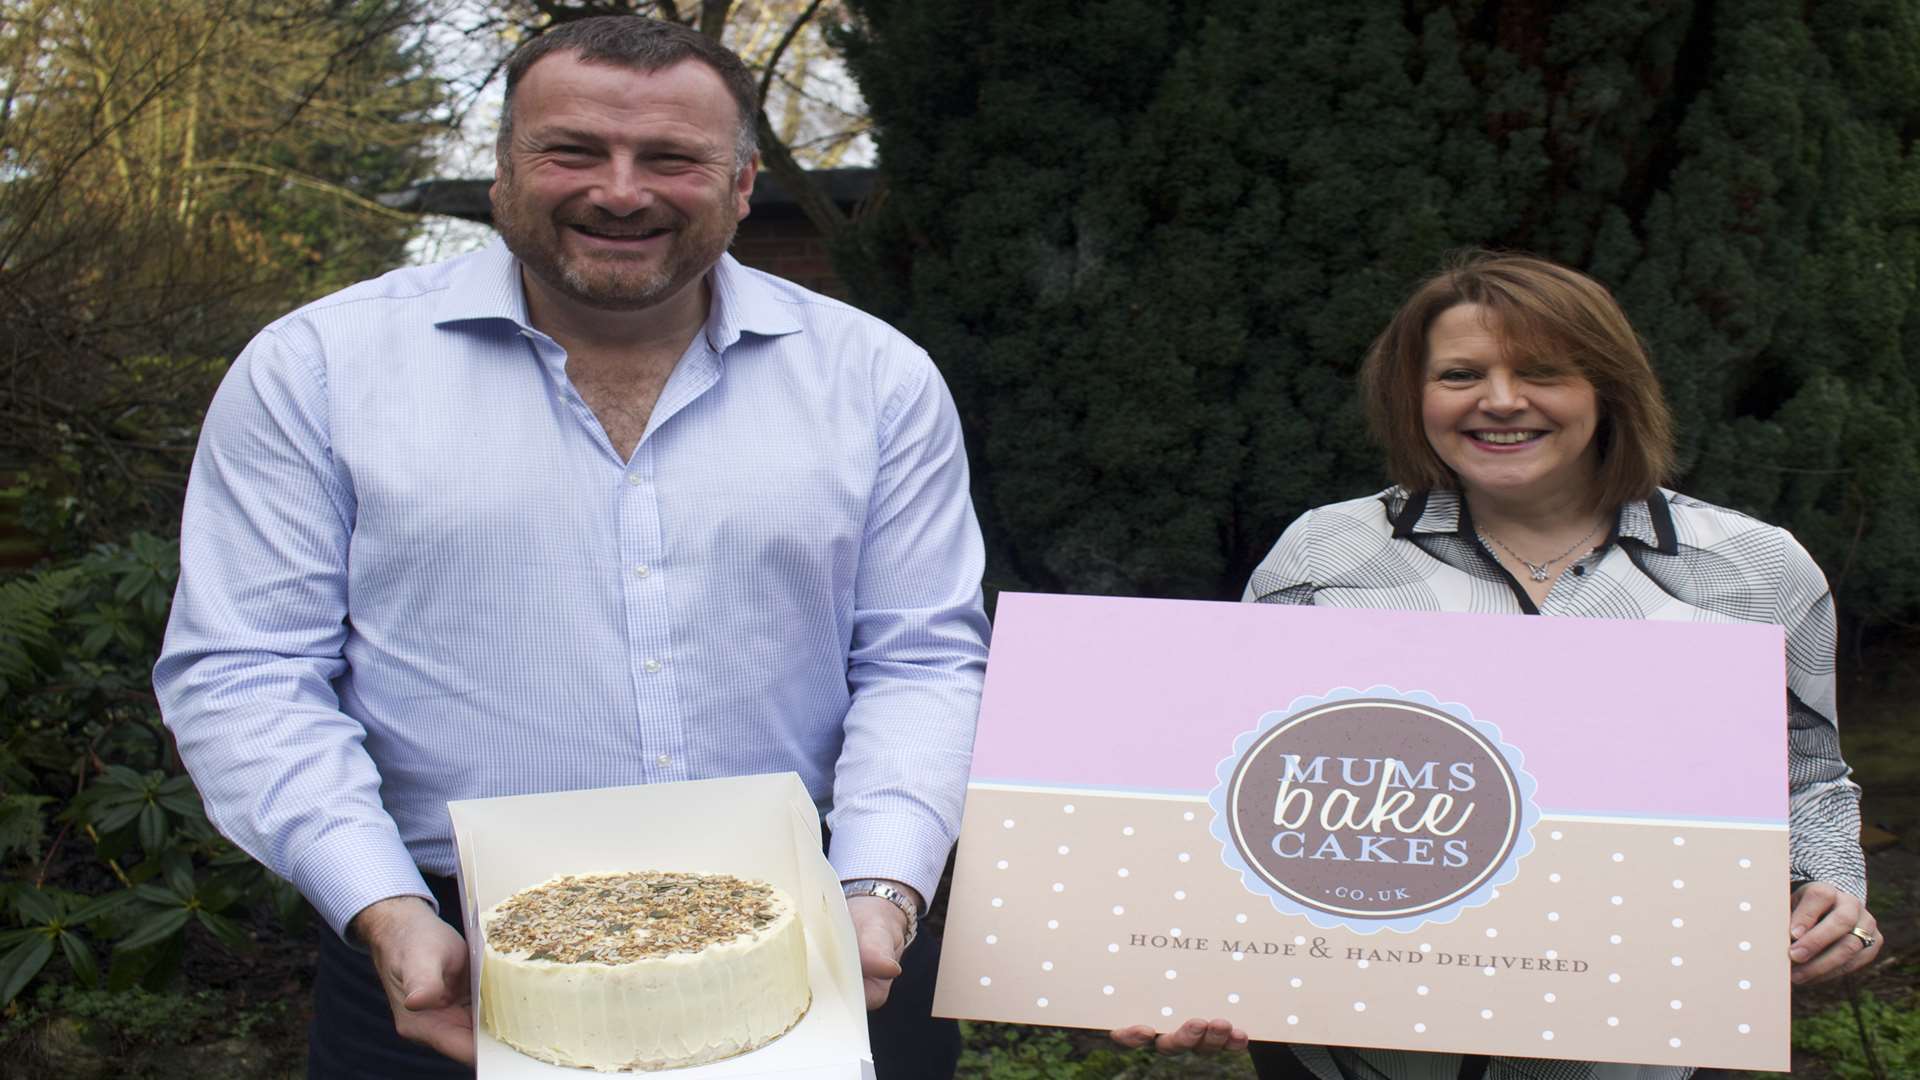 Mums Bake Cakes founders Paula Wilkinson and Richard Watson